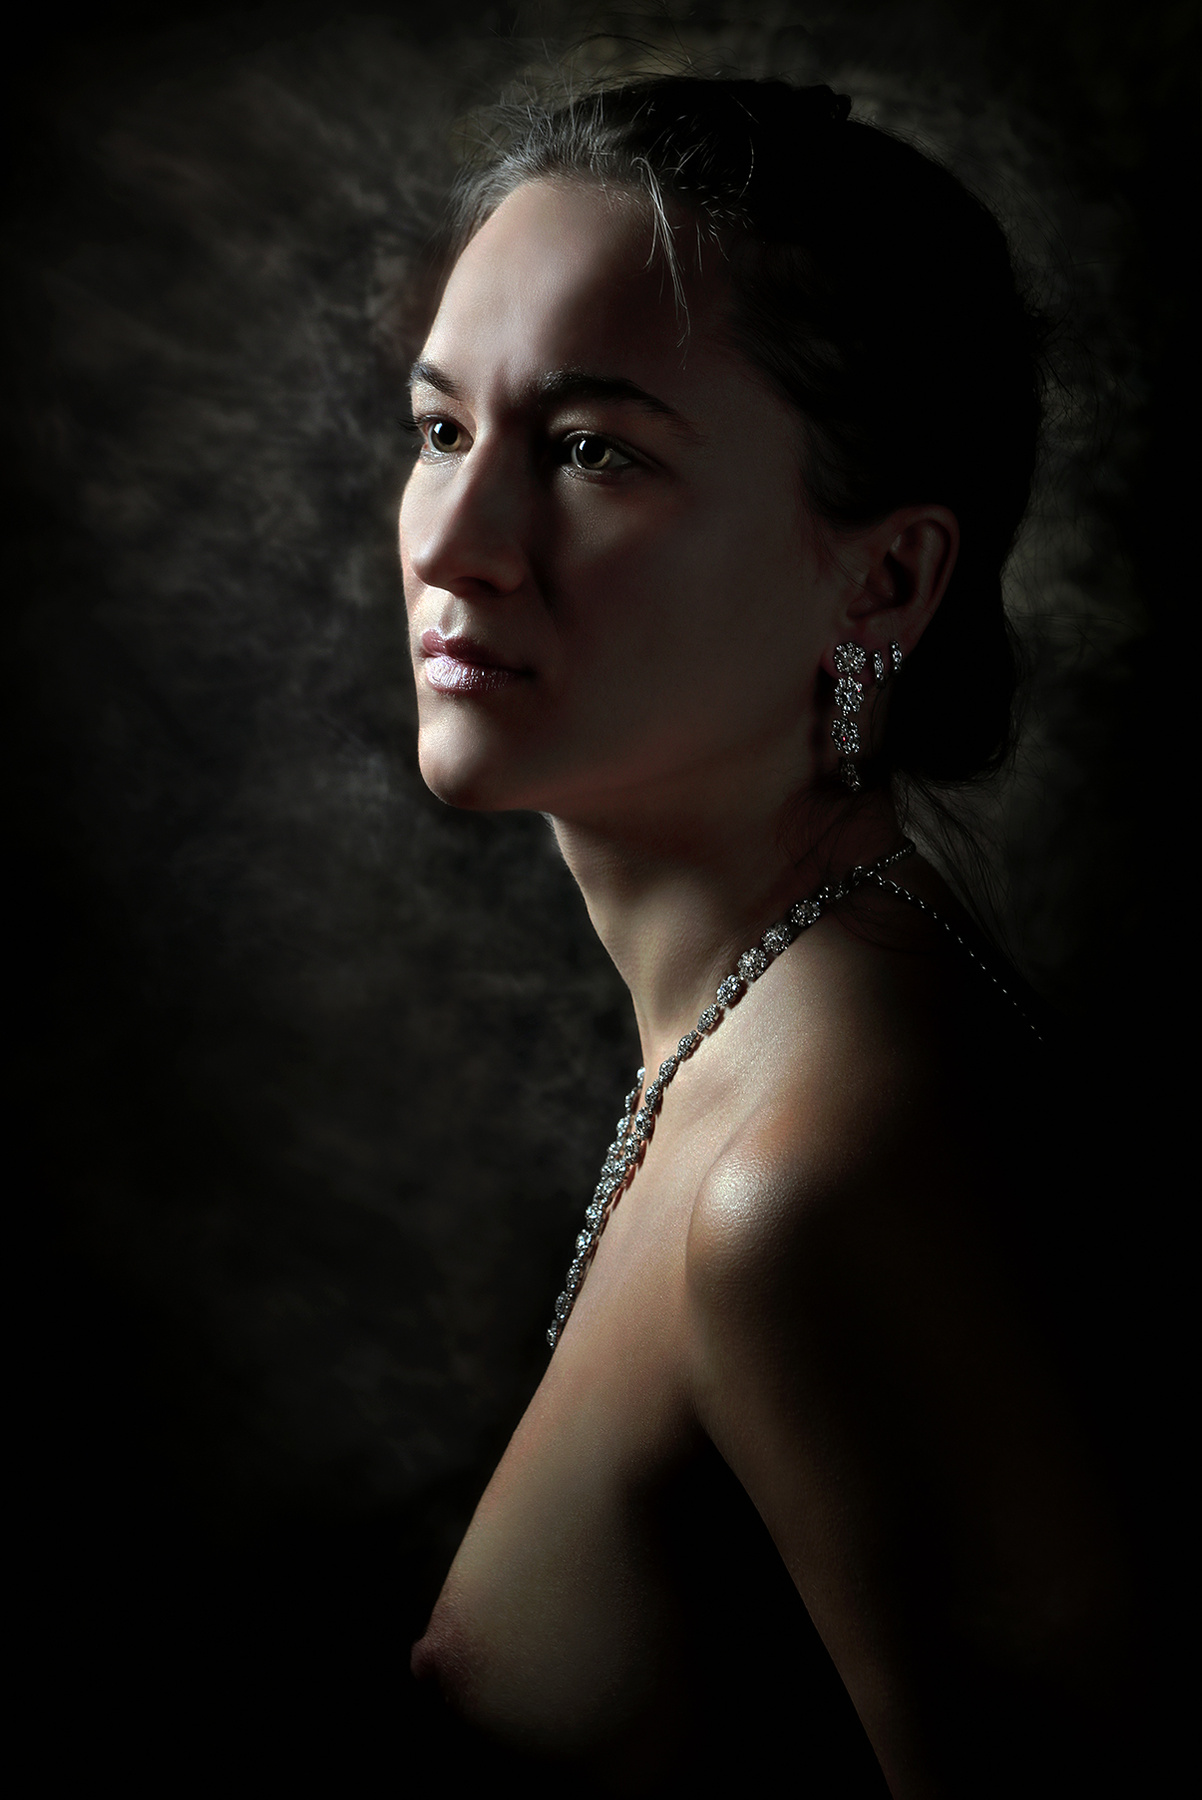 Портрет девушки с ожерельем.... портрет девушка модель образ